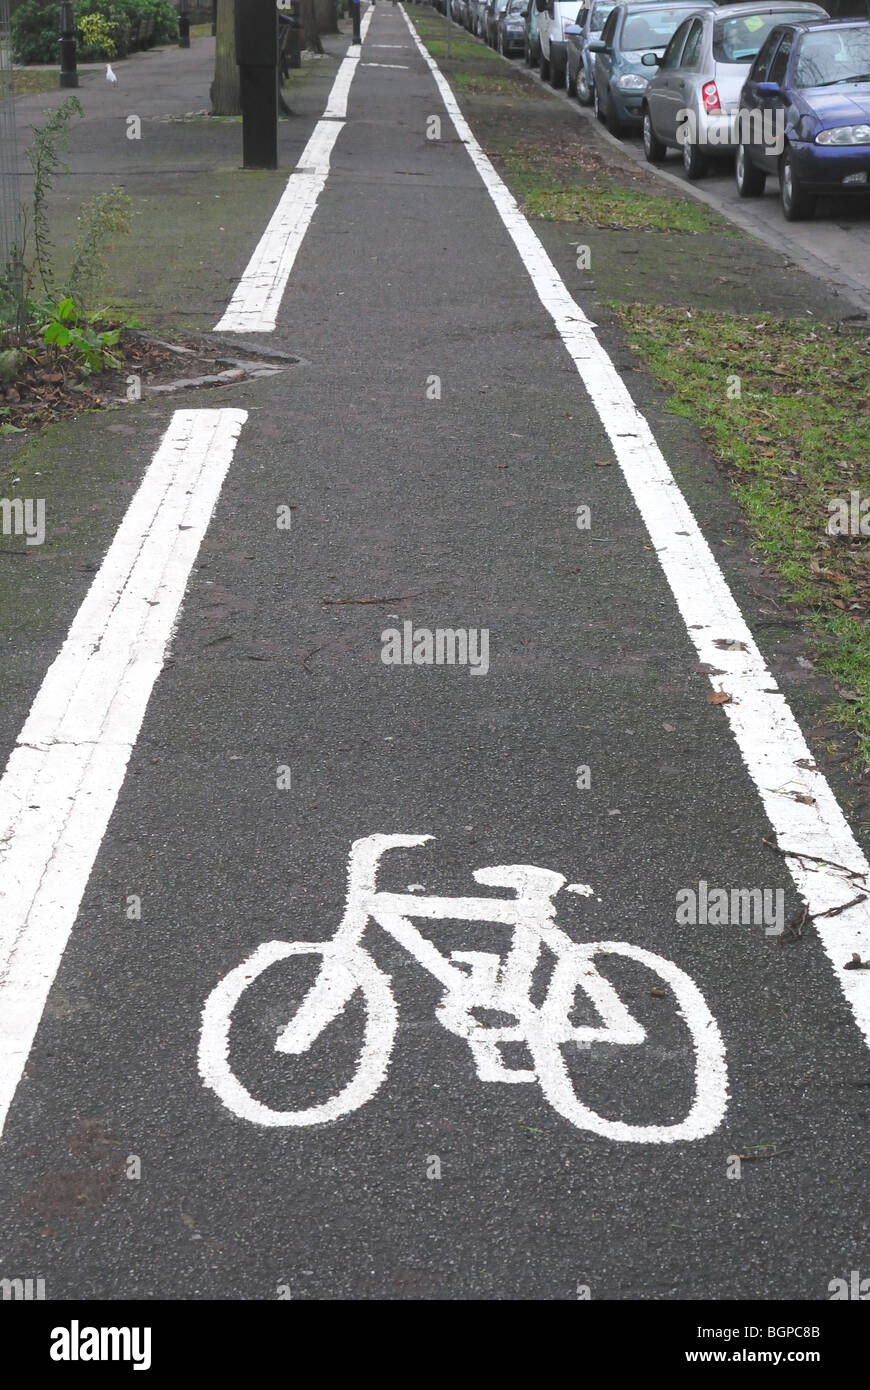 Cycle lane road marking Stock Photo